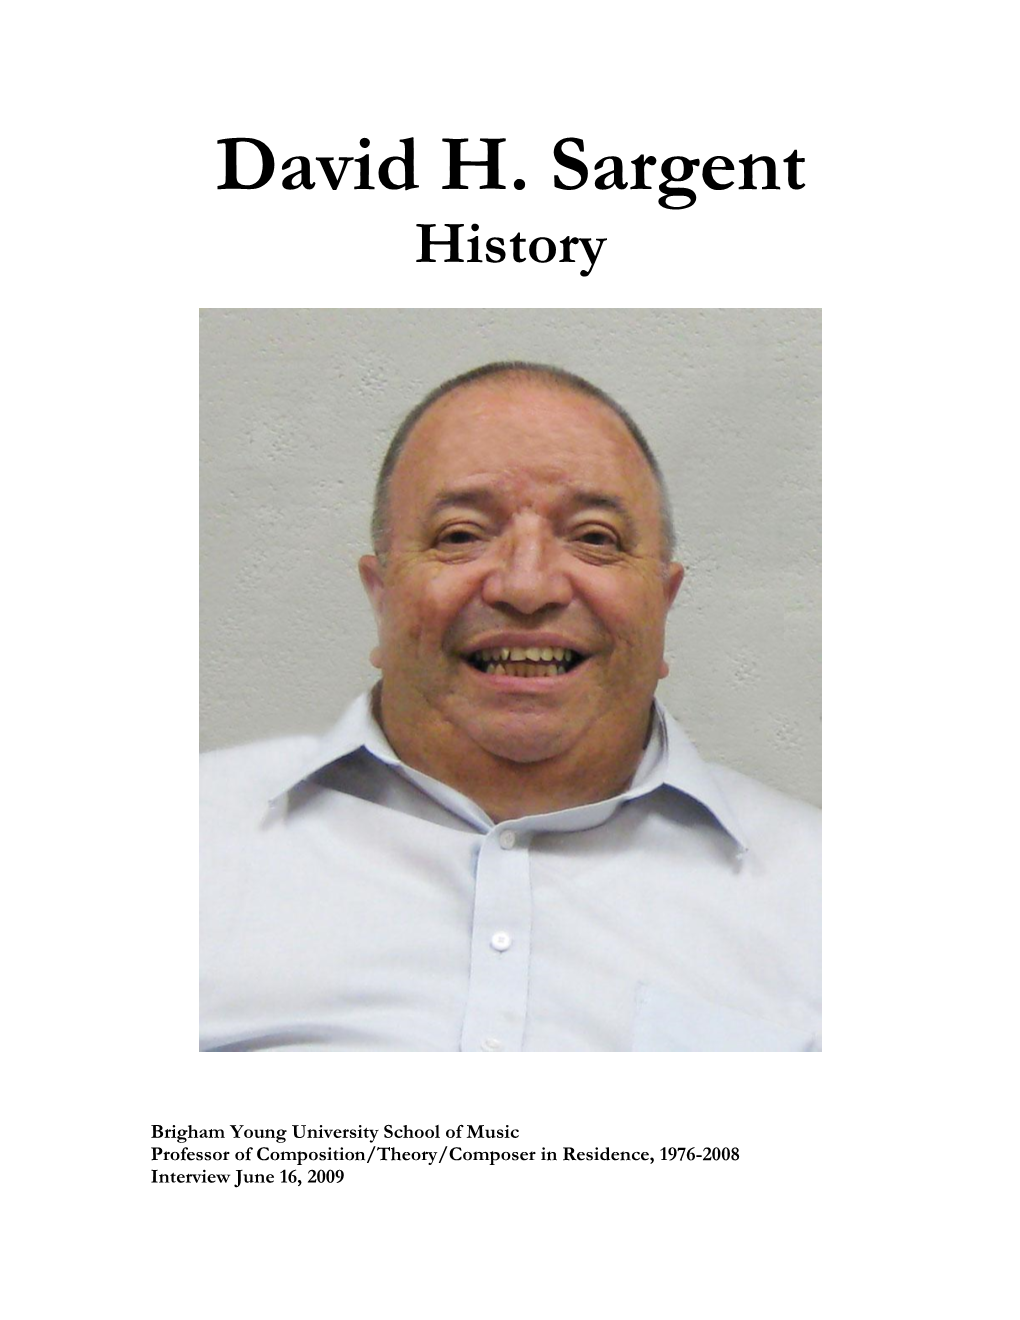 David H. Sargent History